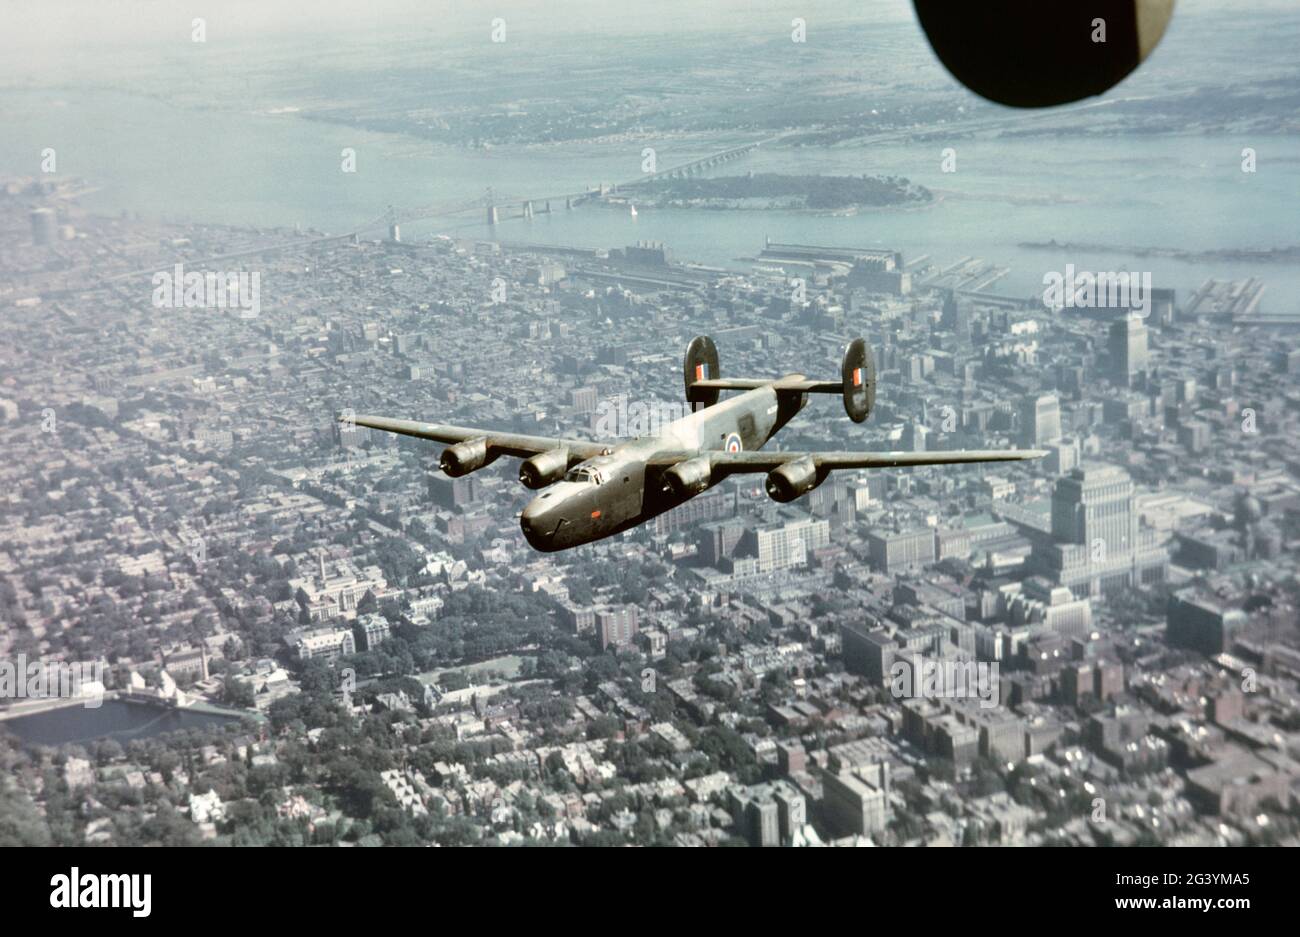 Consolidated B-24 Liberator Foto Stock